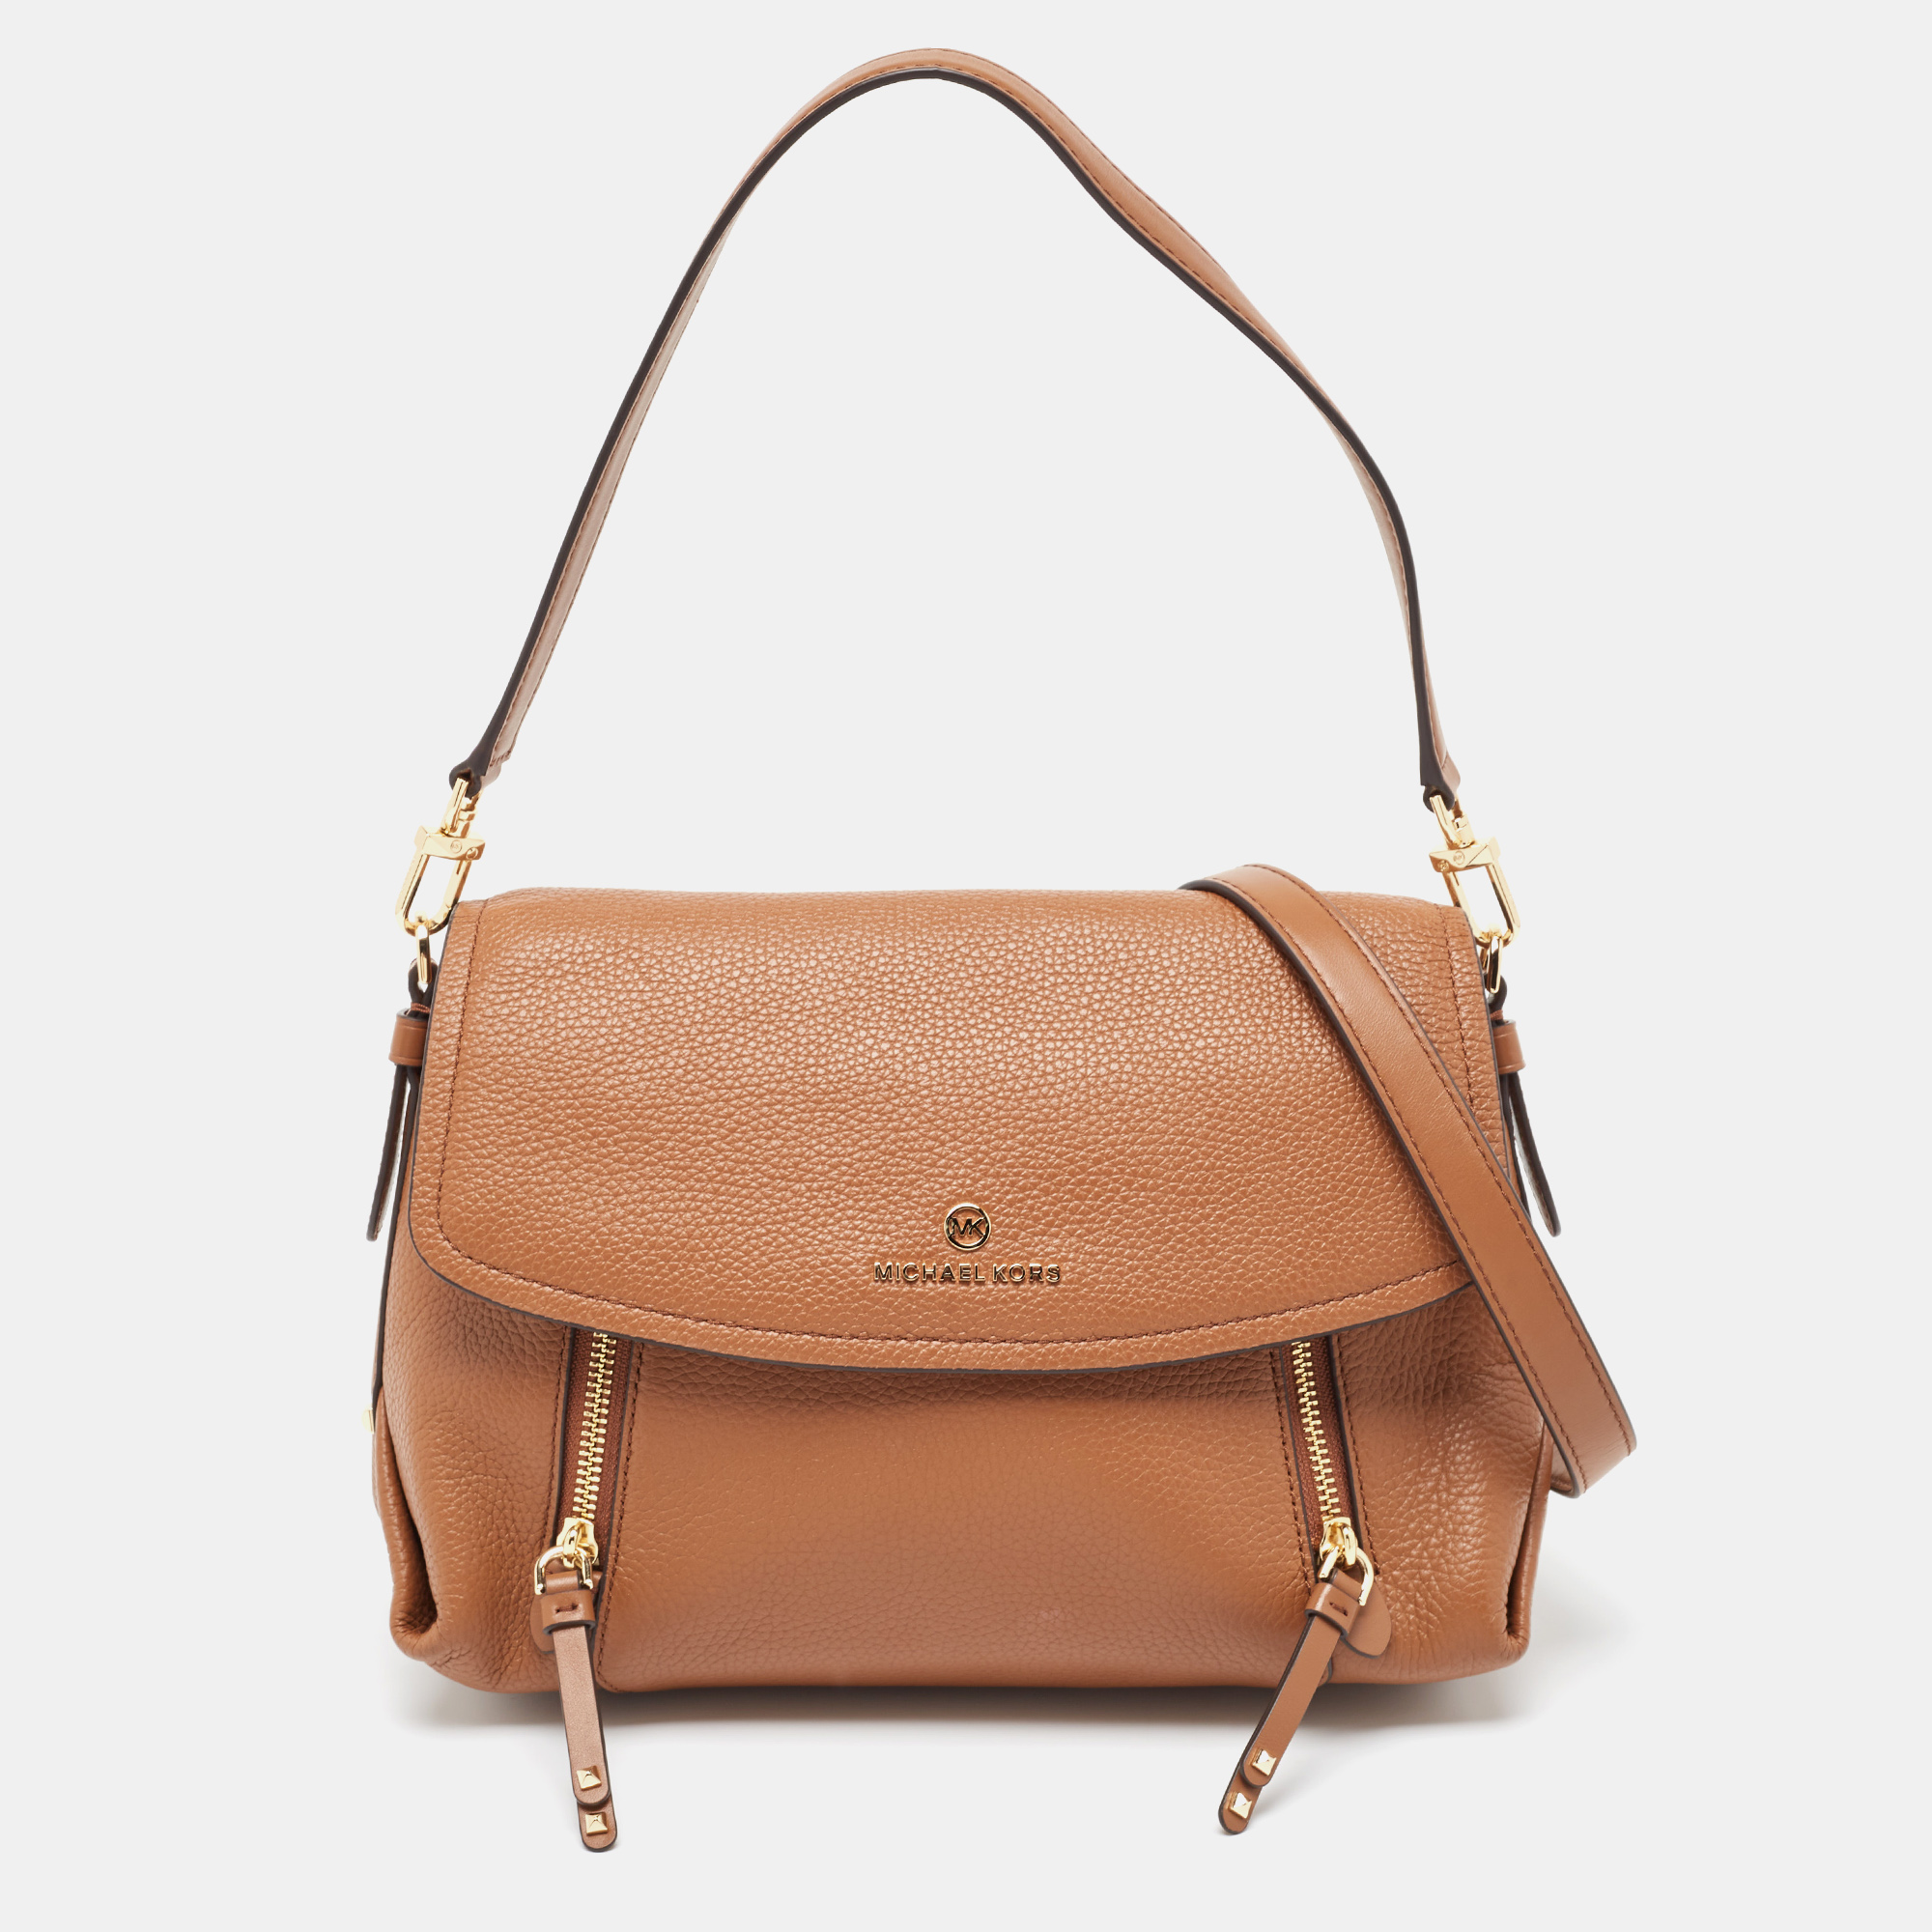 Michael Kors Brown Leather Medium Brooklyn Top Handle Bag